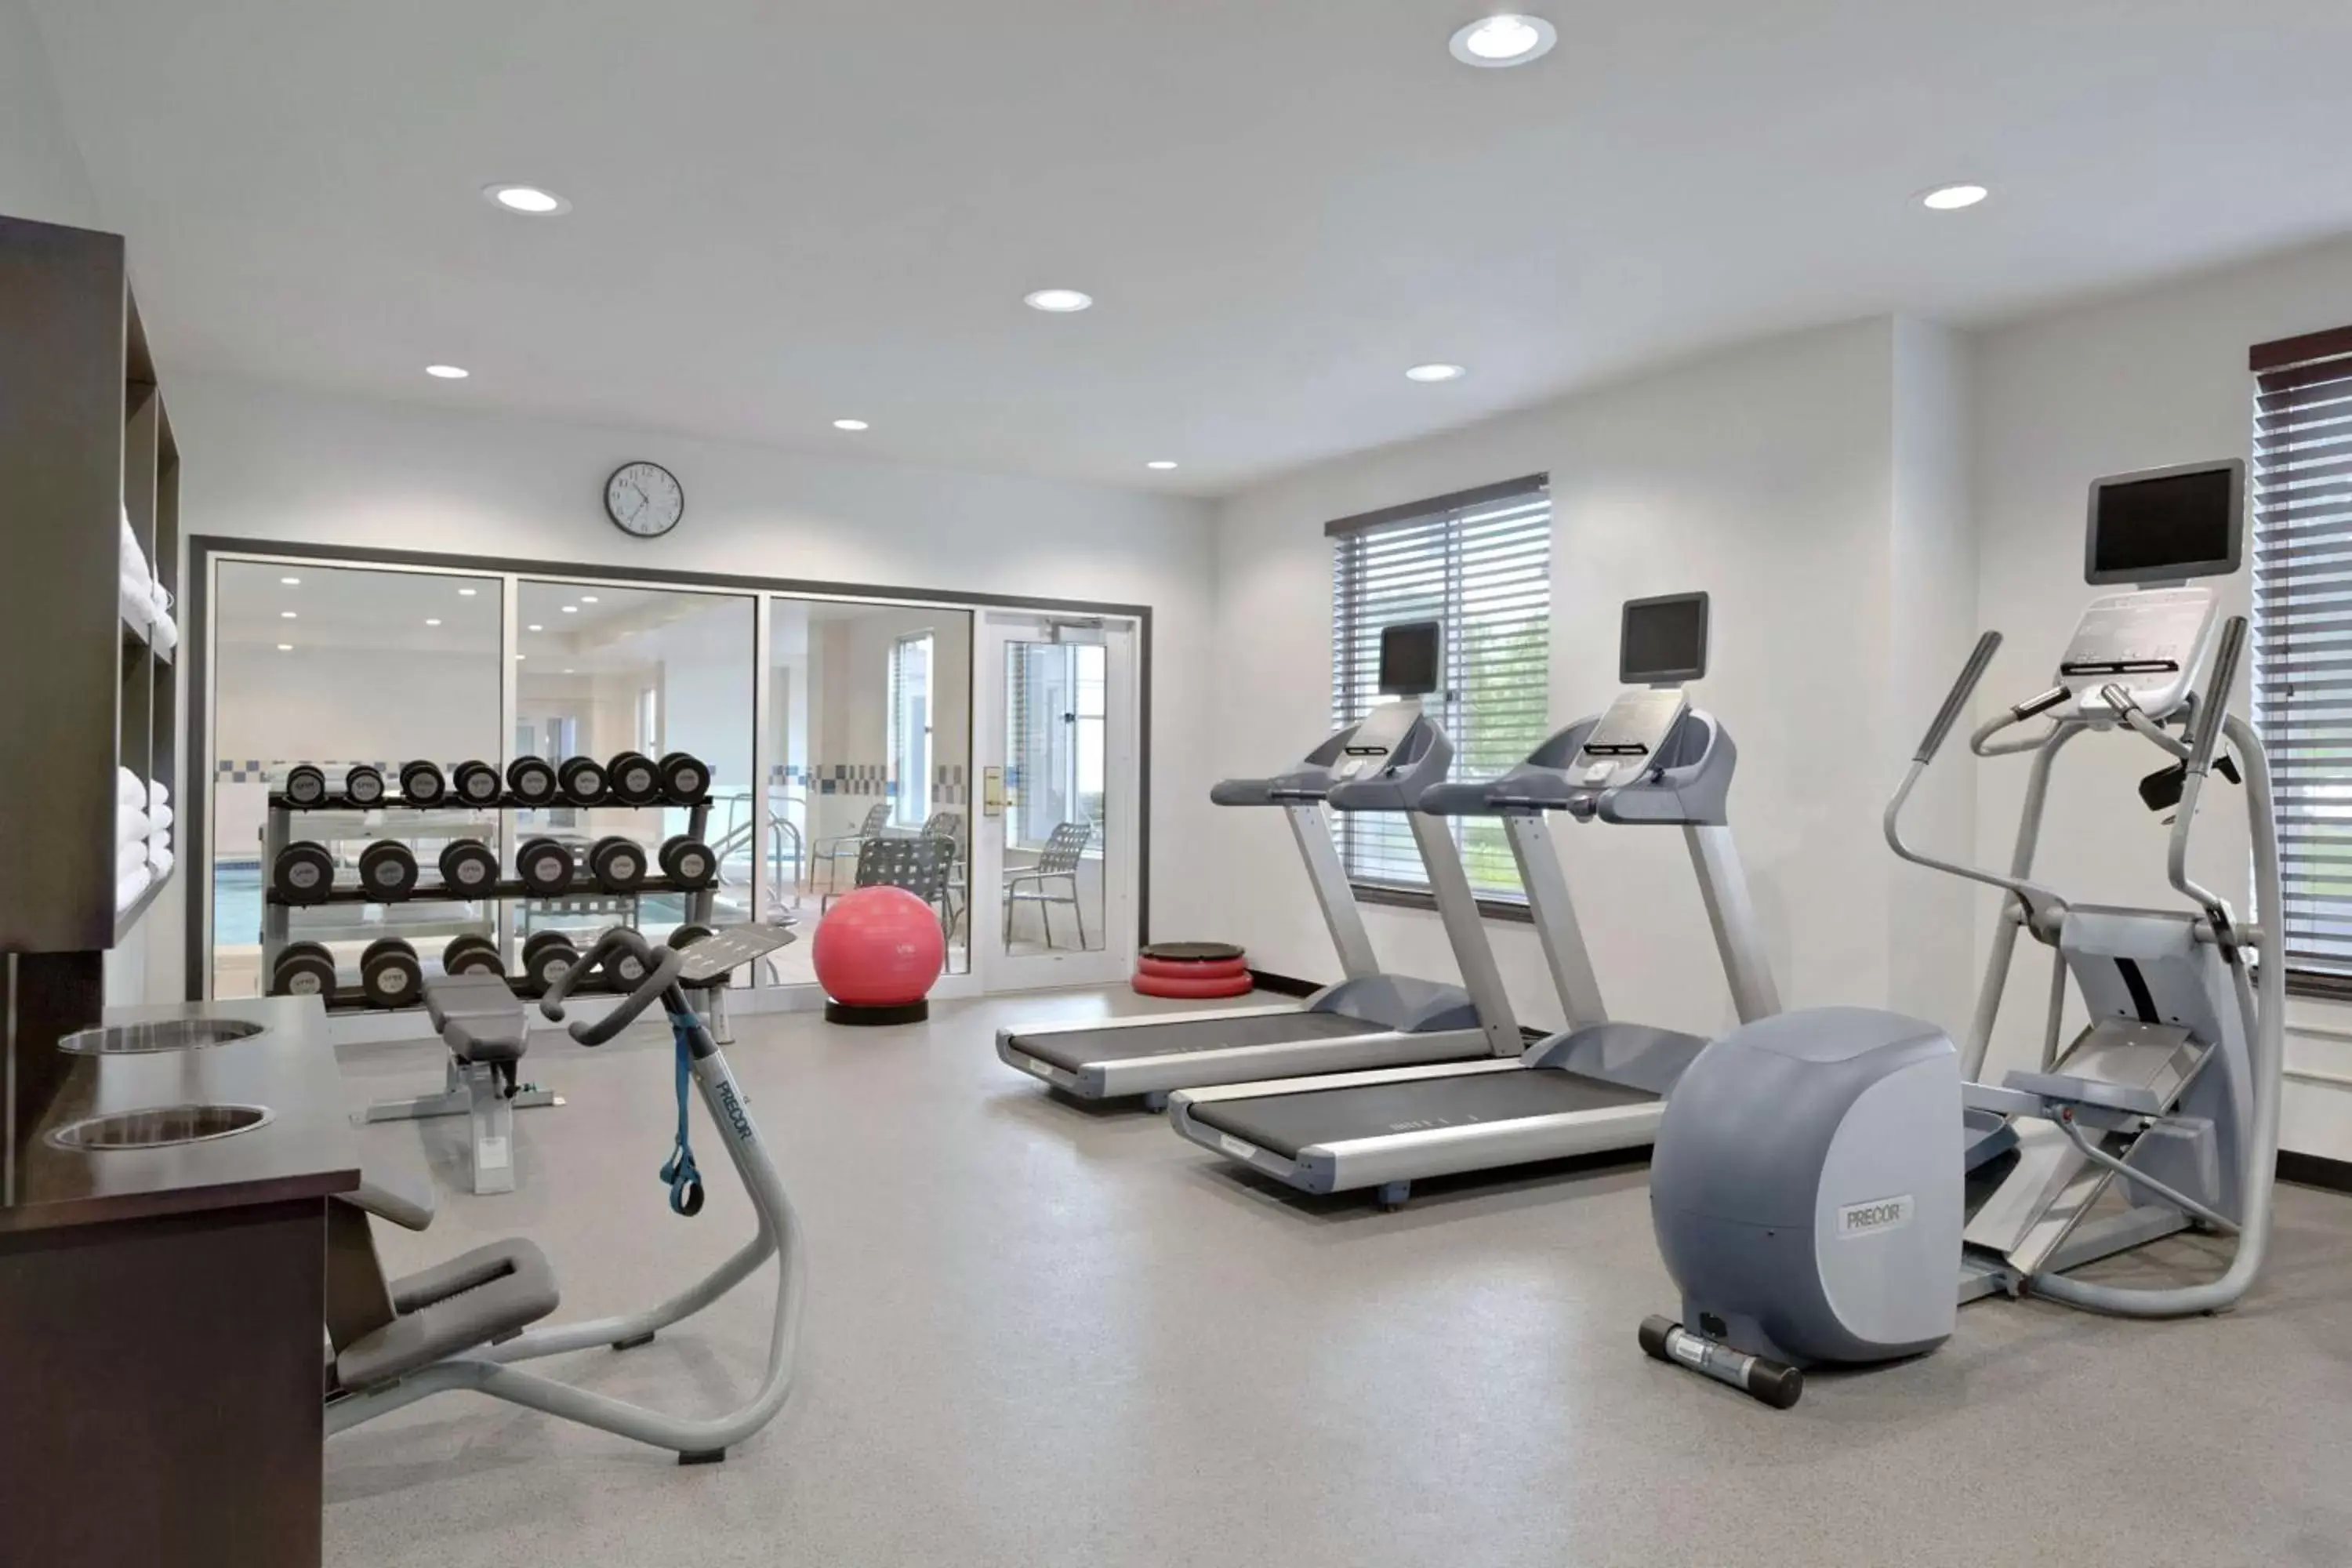 Fitness centre/facilities, Fitness Center/Facilities in Hilton Garden Inn Springfield, MA